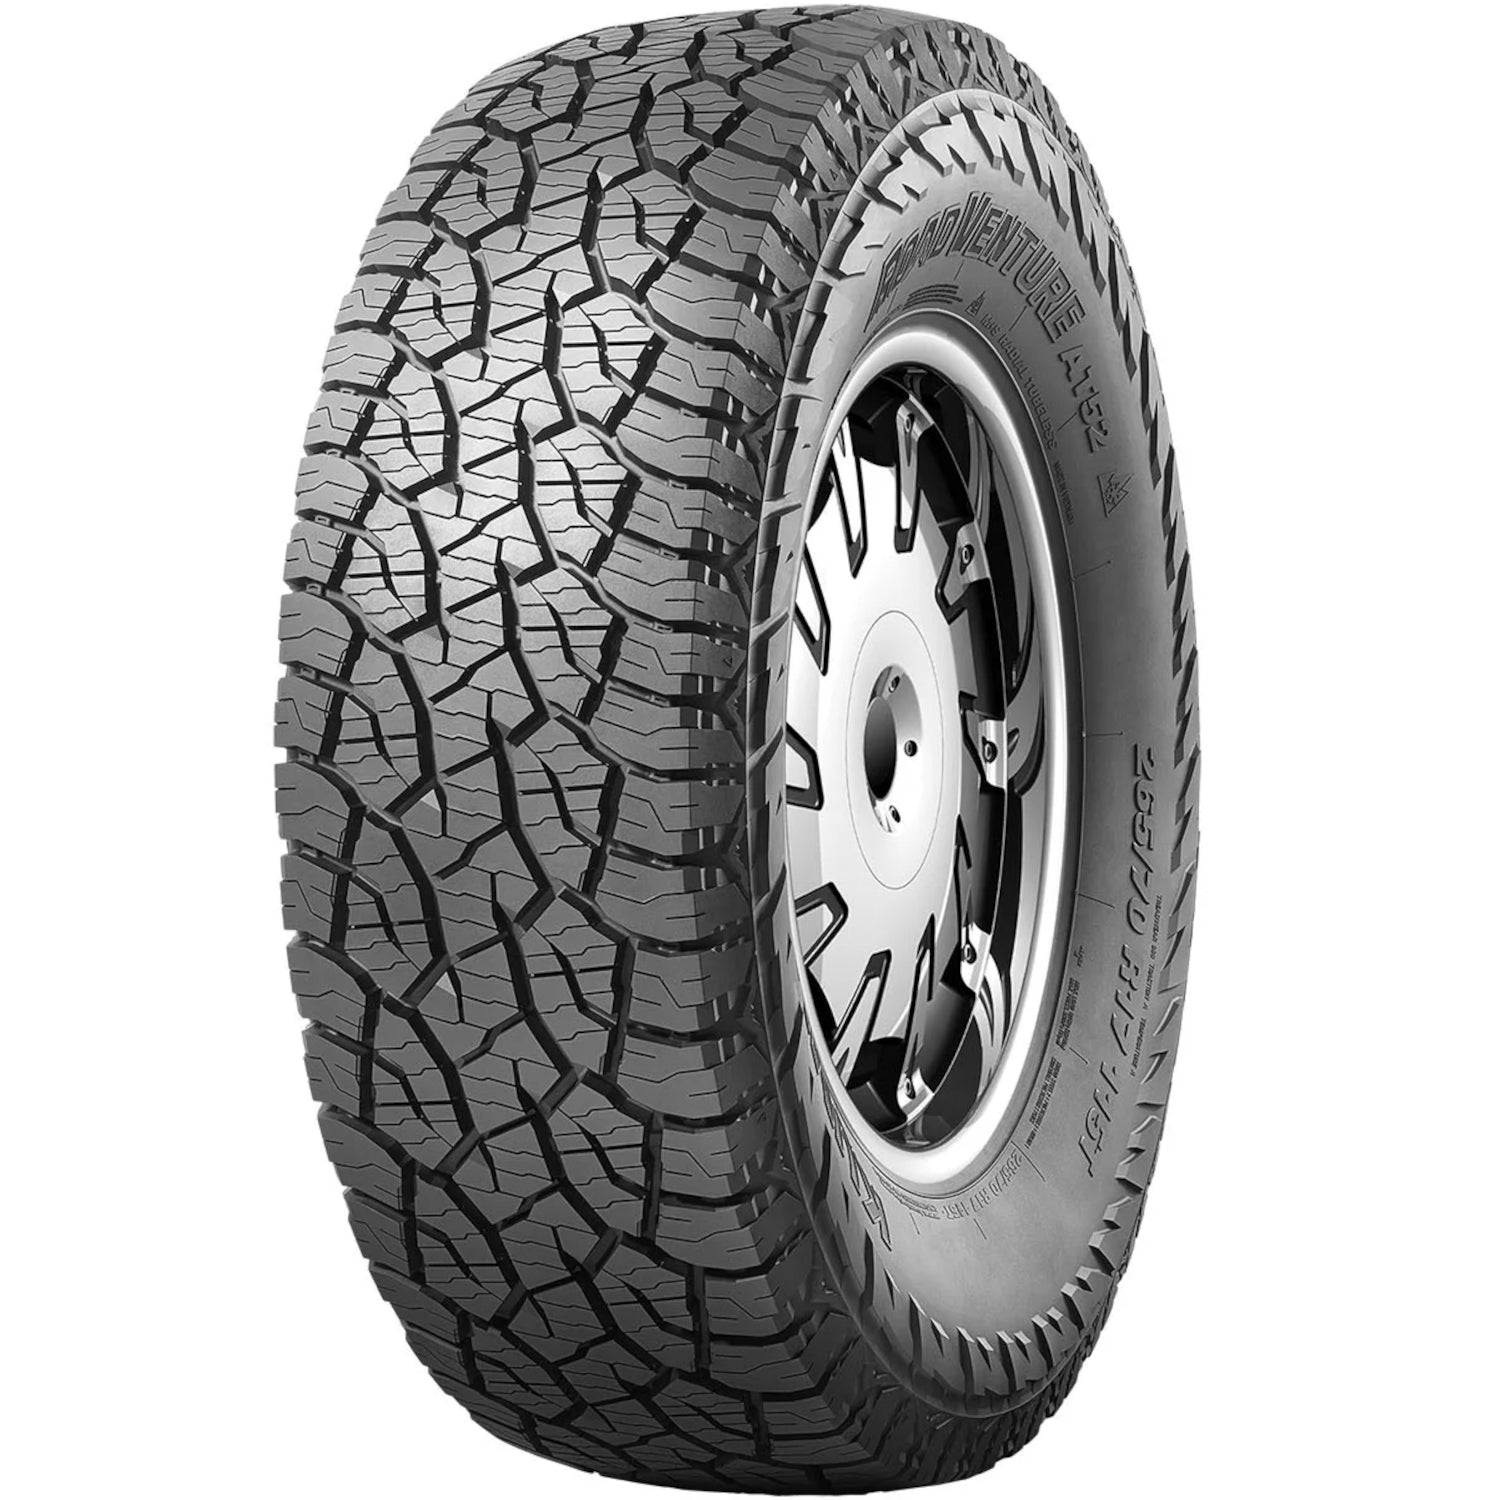 KUMHO ROAD VENTURE AT52 LT245/75R17 (31.5X9.7R 17) Tires